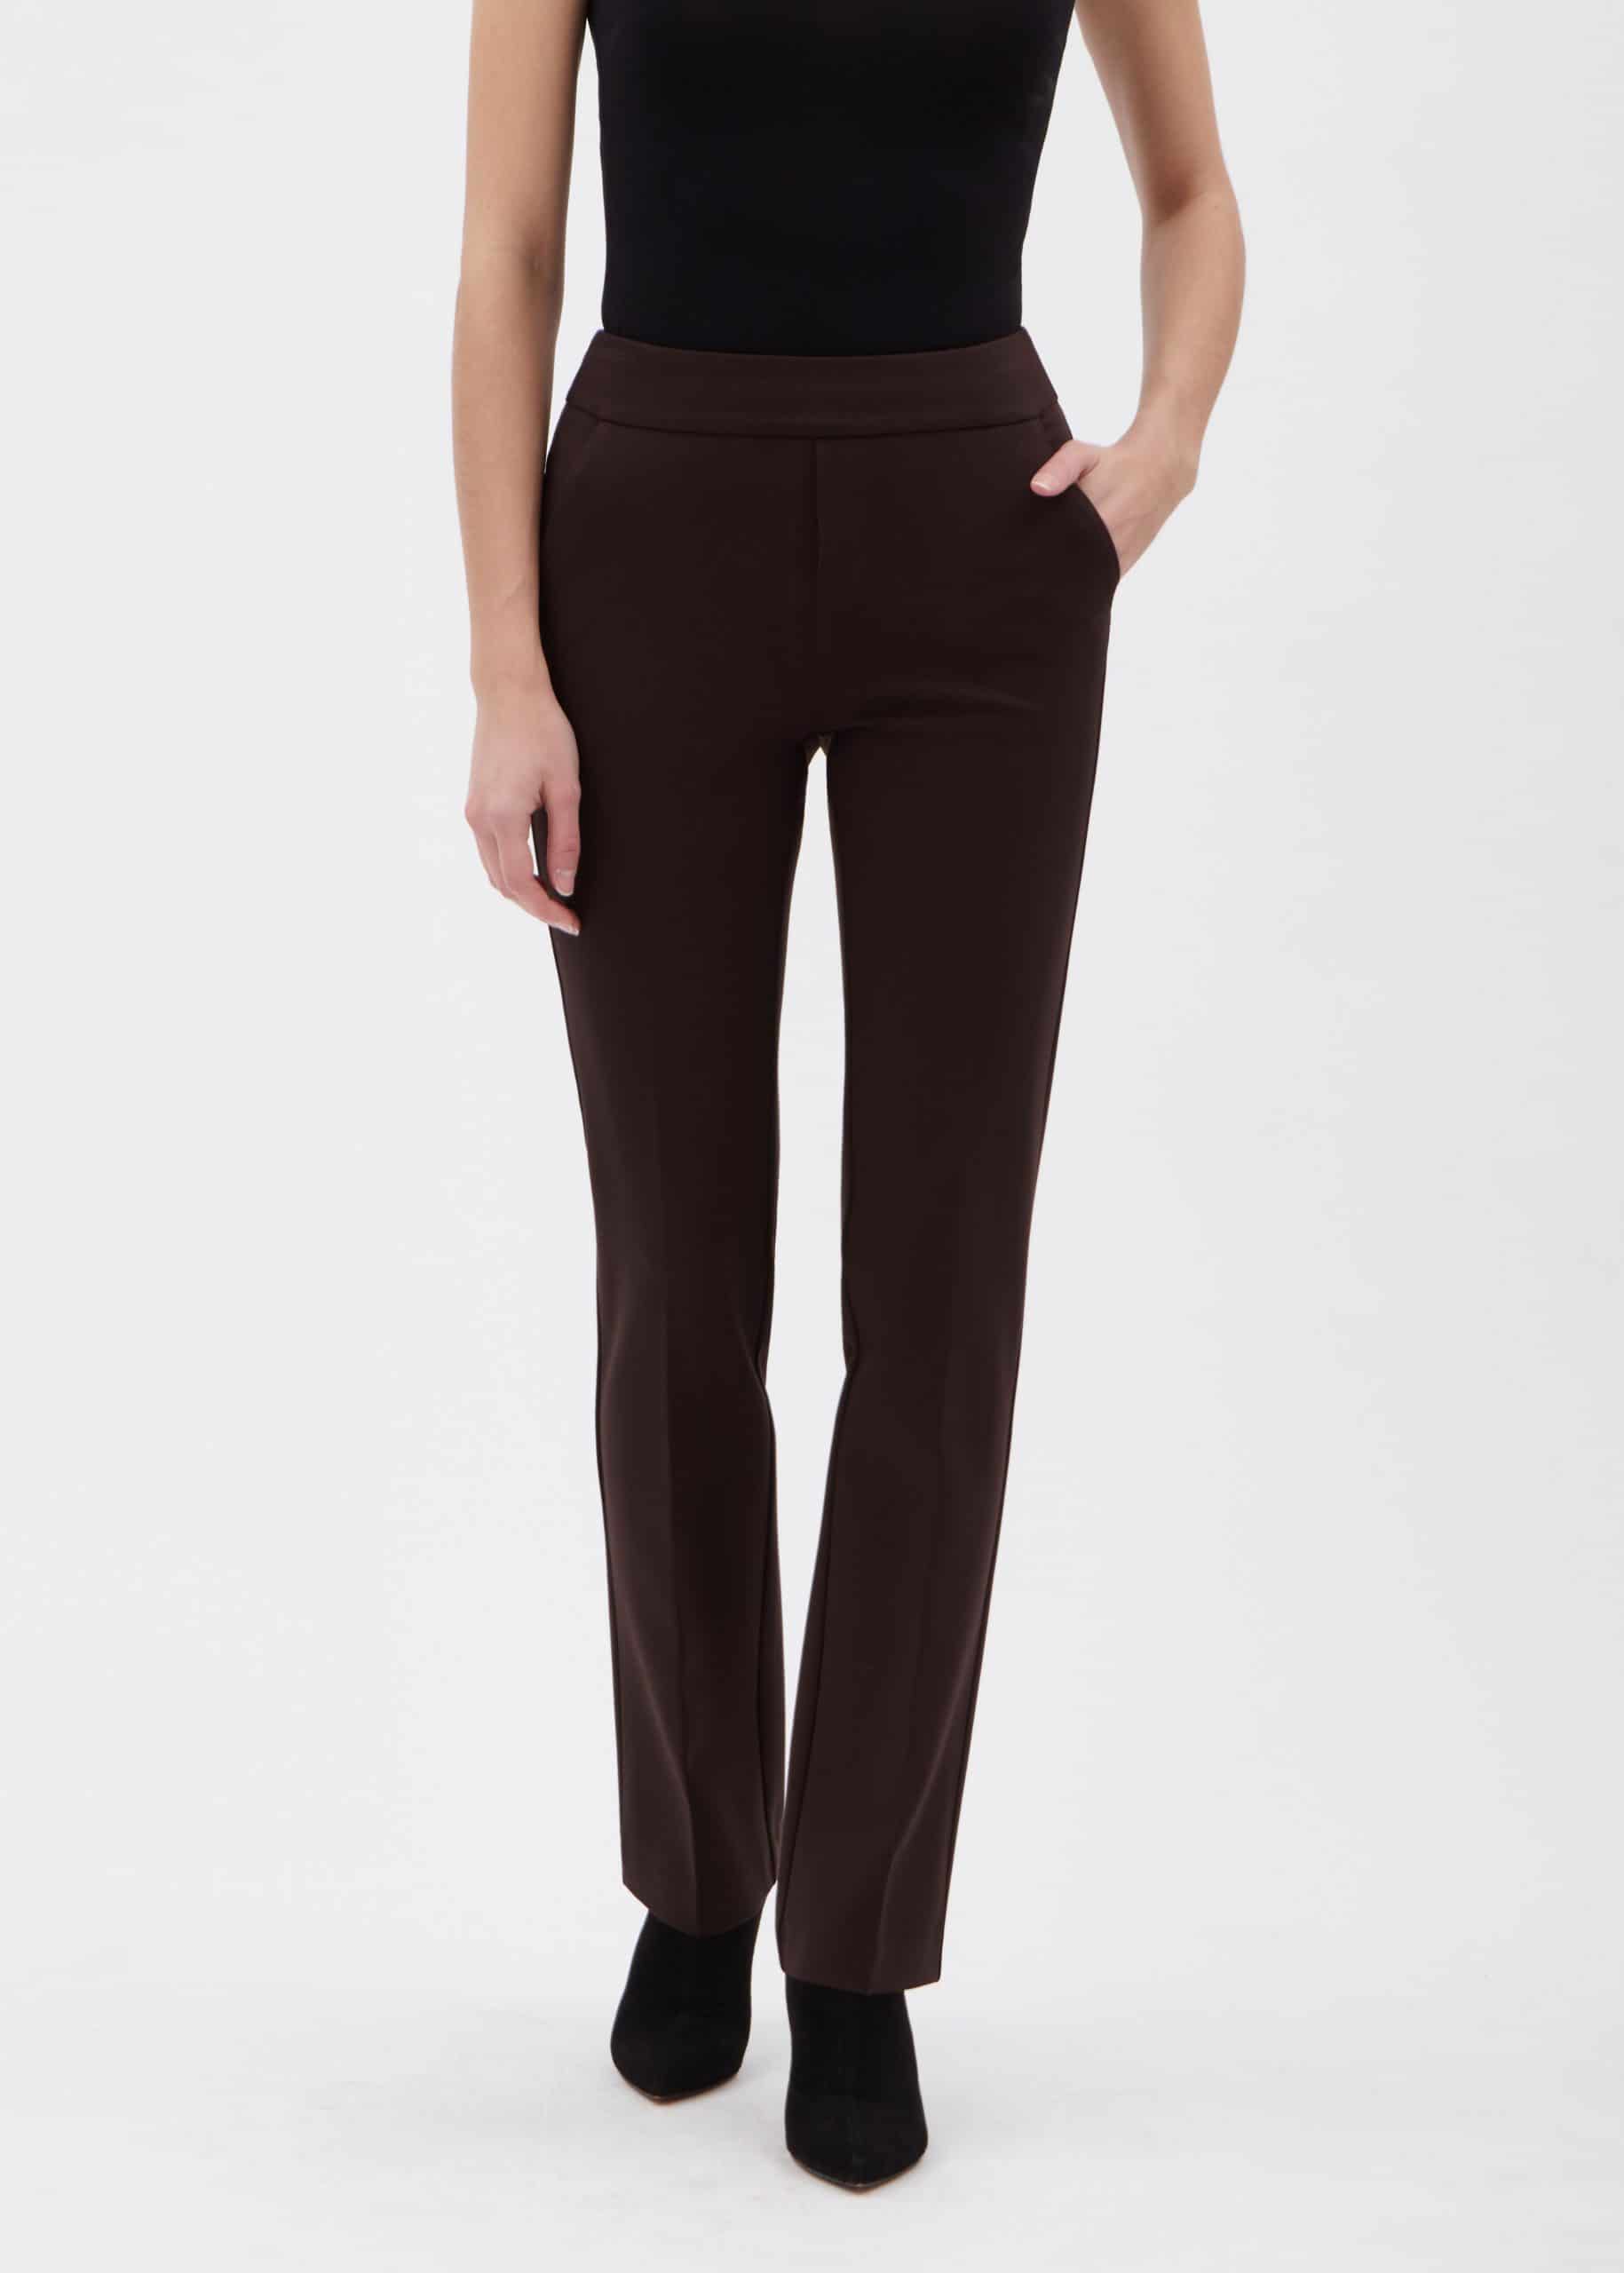 Bellina, Pants & Jumpsuits, New Bellina Brown Straight Leg Ponte Pants  Size Medium Petite Bin U